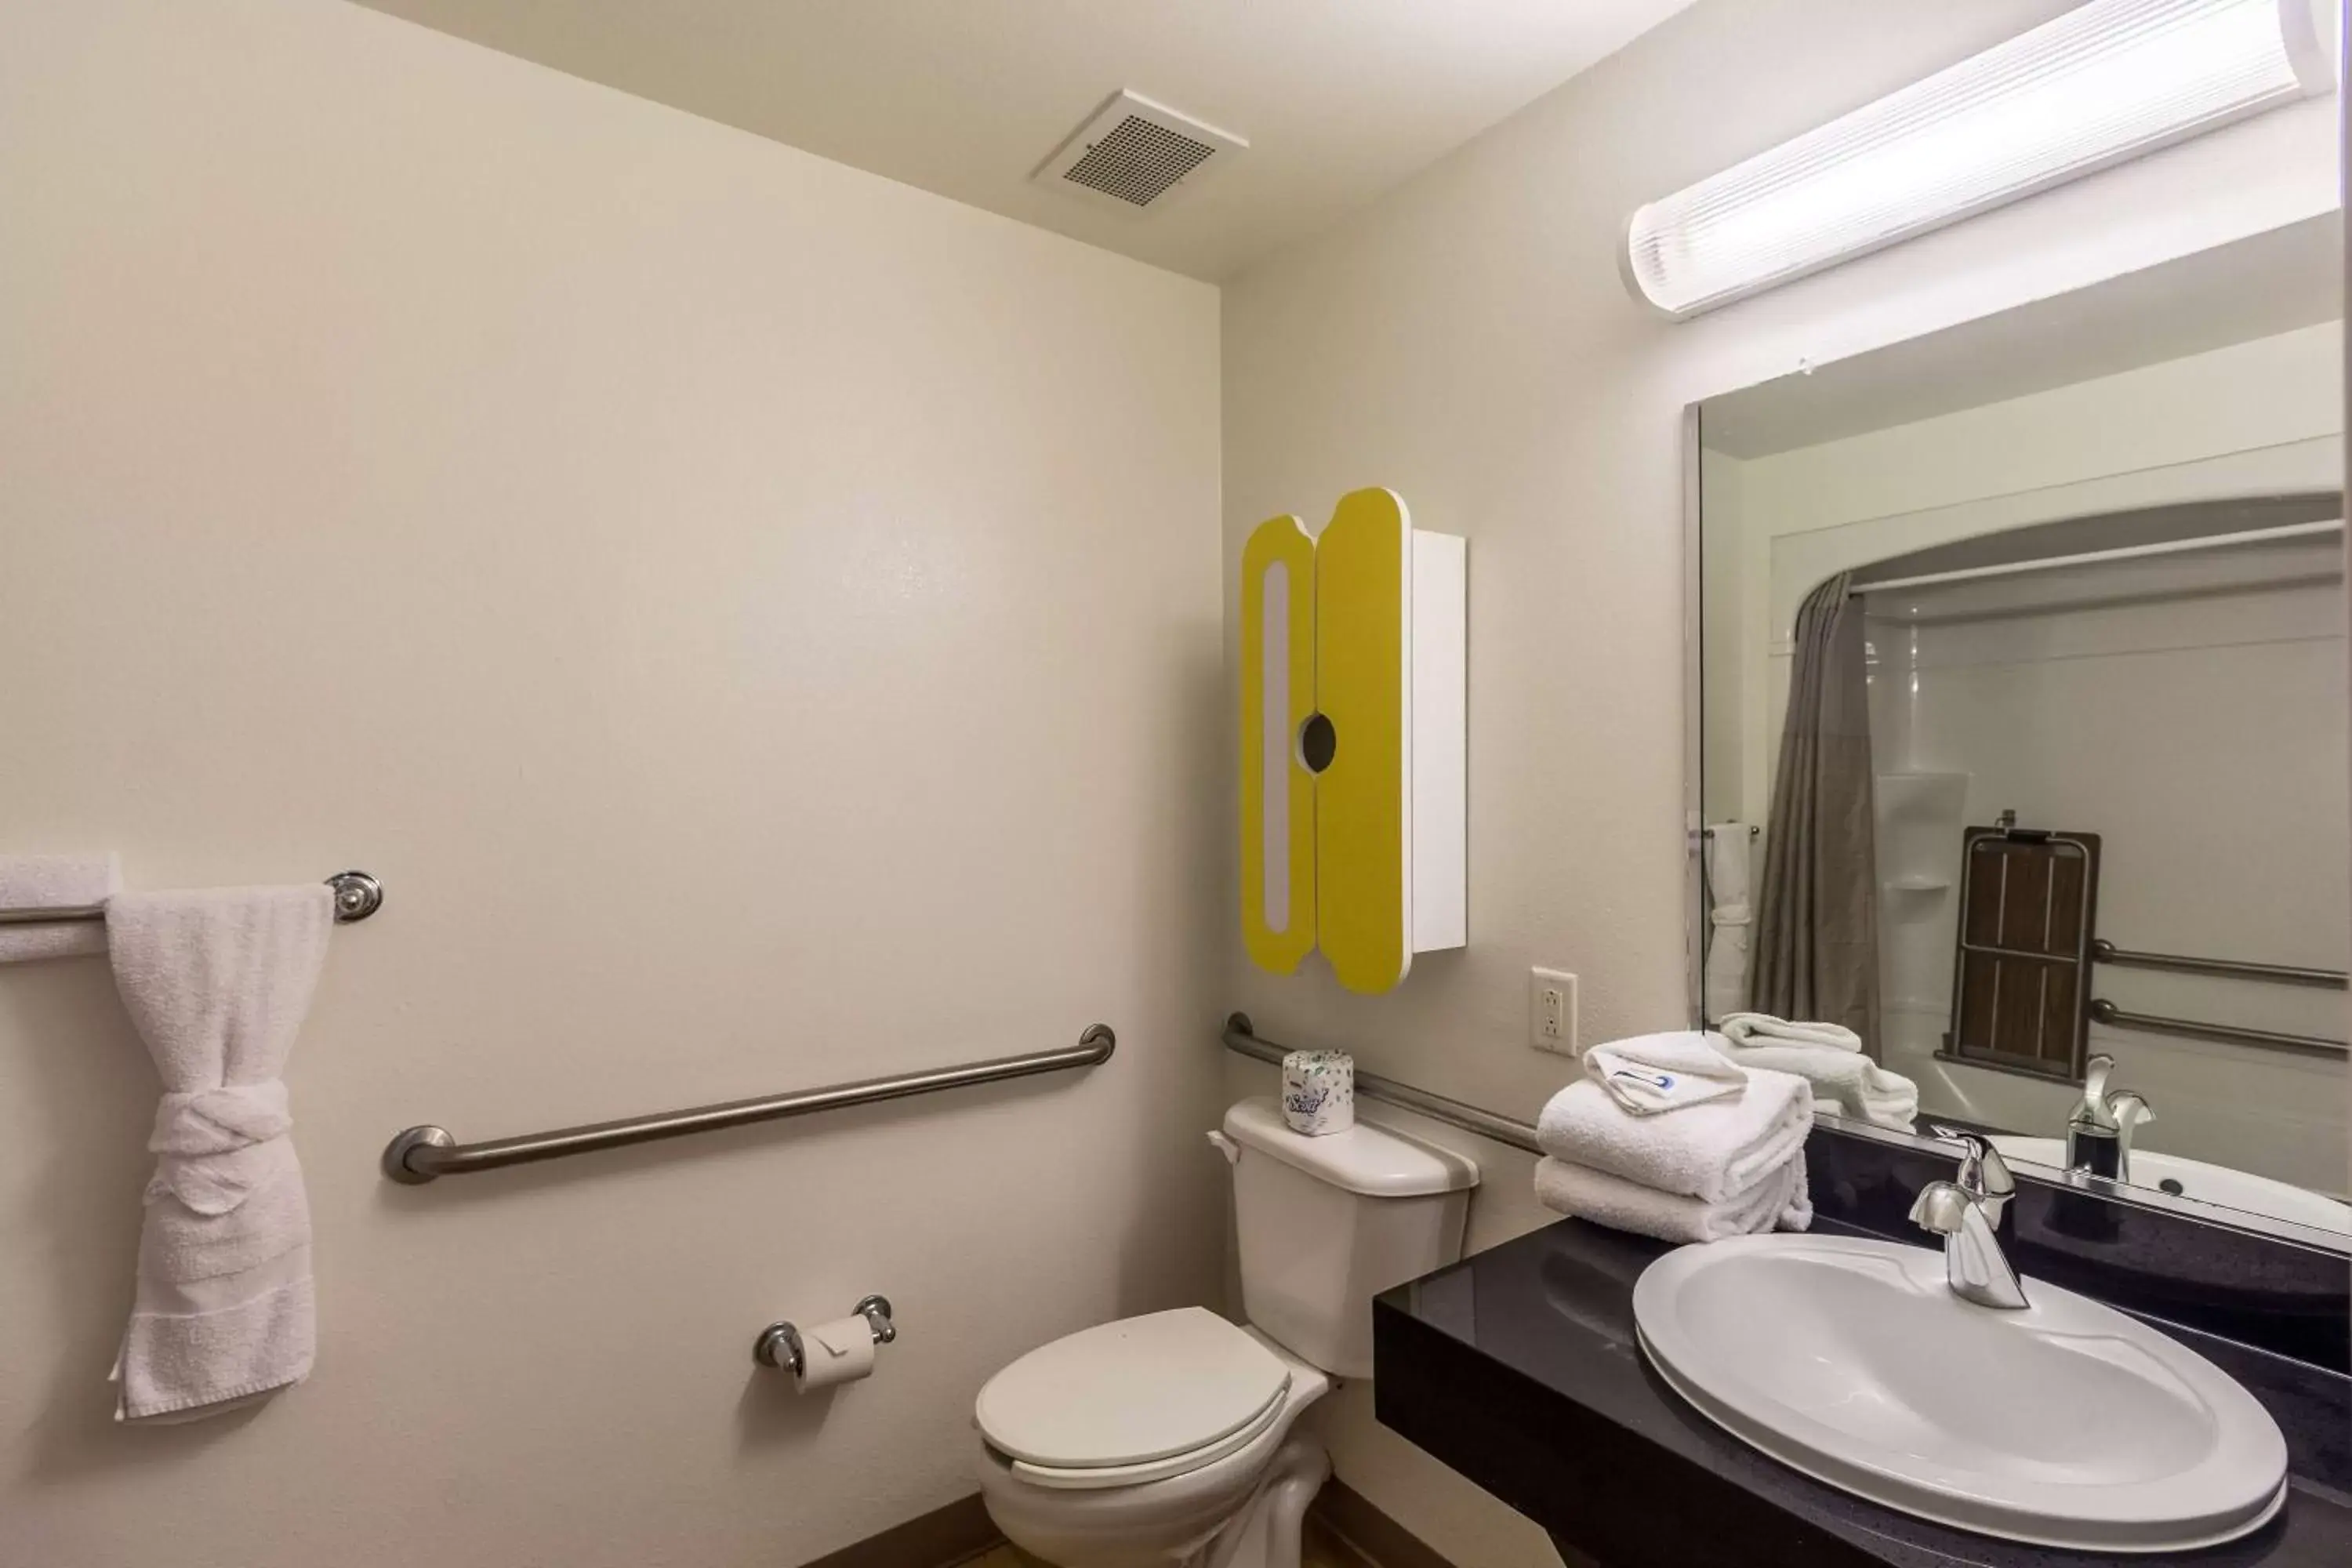 Photo of the whole room, Bathroom in Studio 6-Mcallen, TX